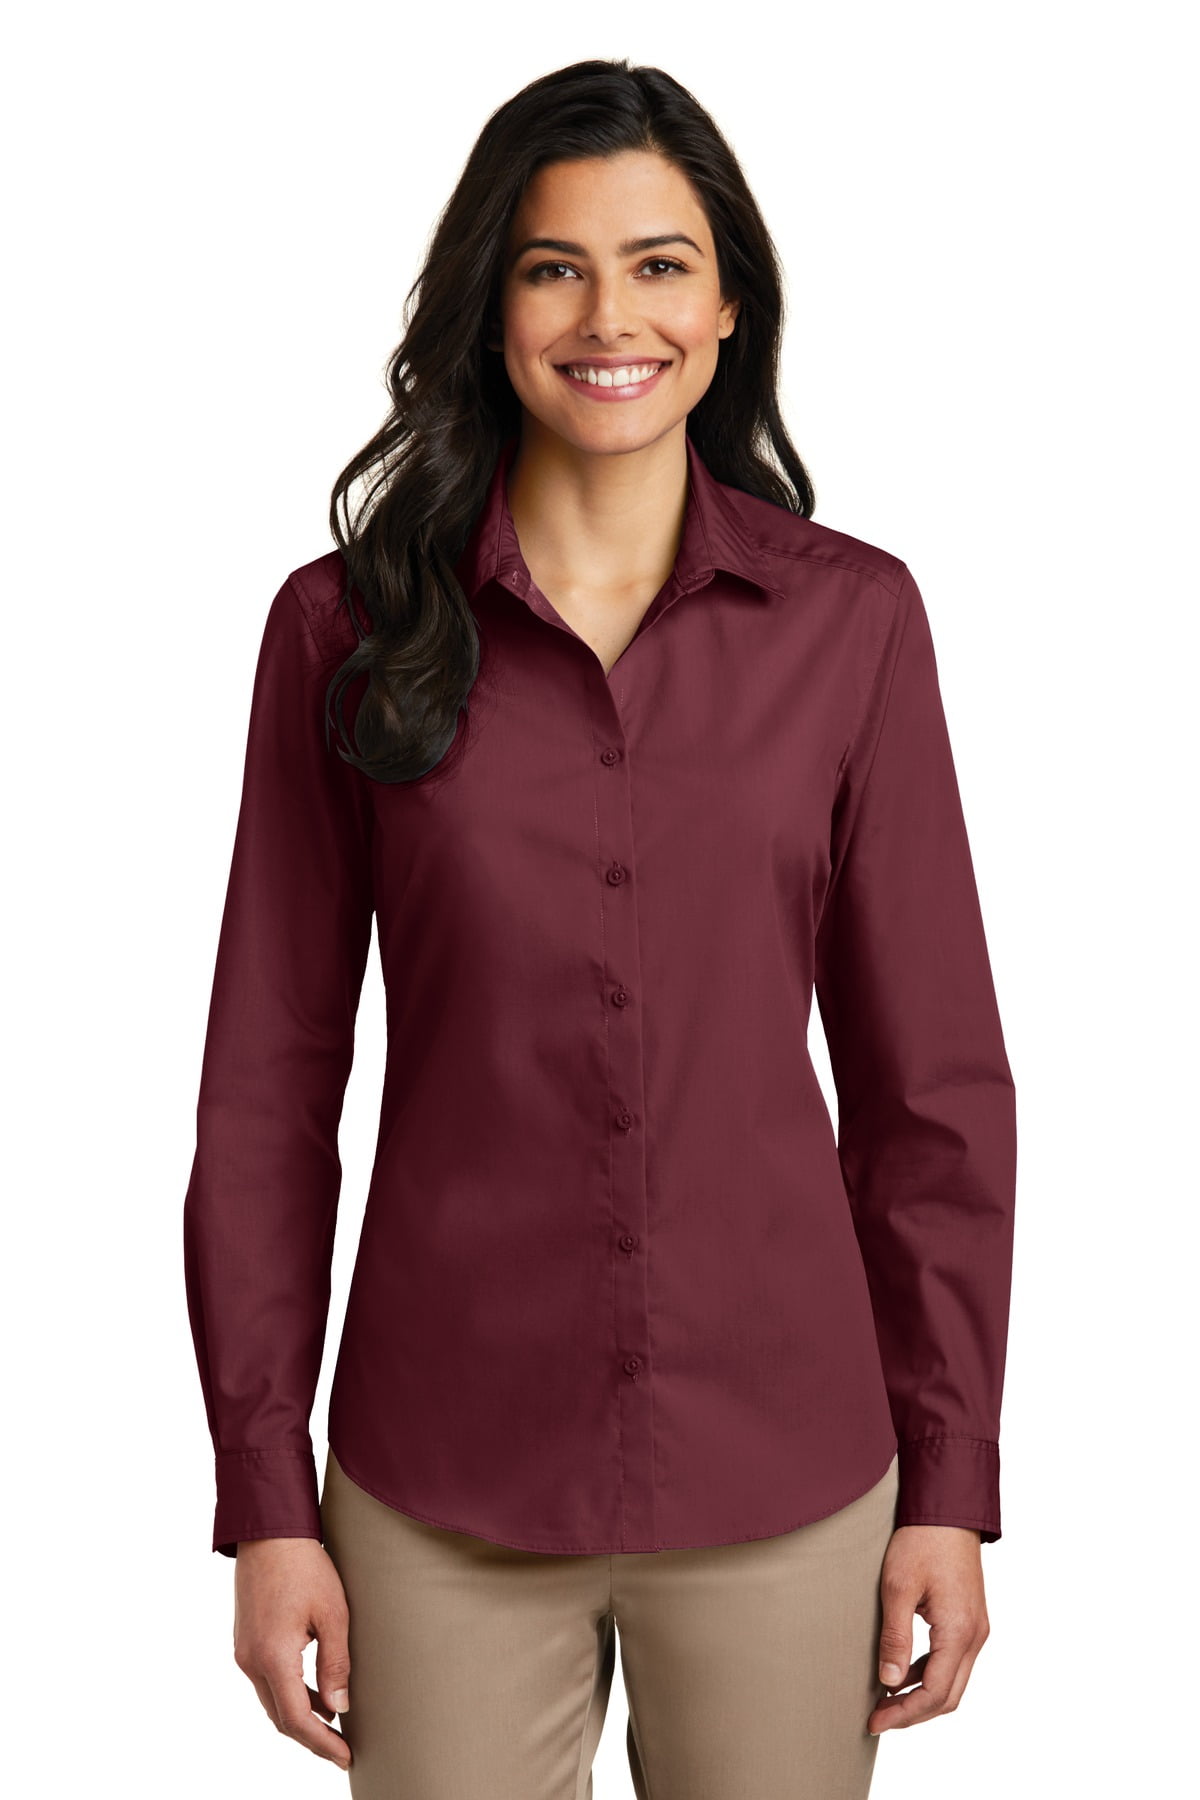 Port Authority Adult Female Women Plain Long Sleeves Shirt Burgundy Medium  